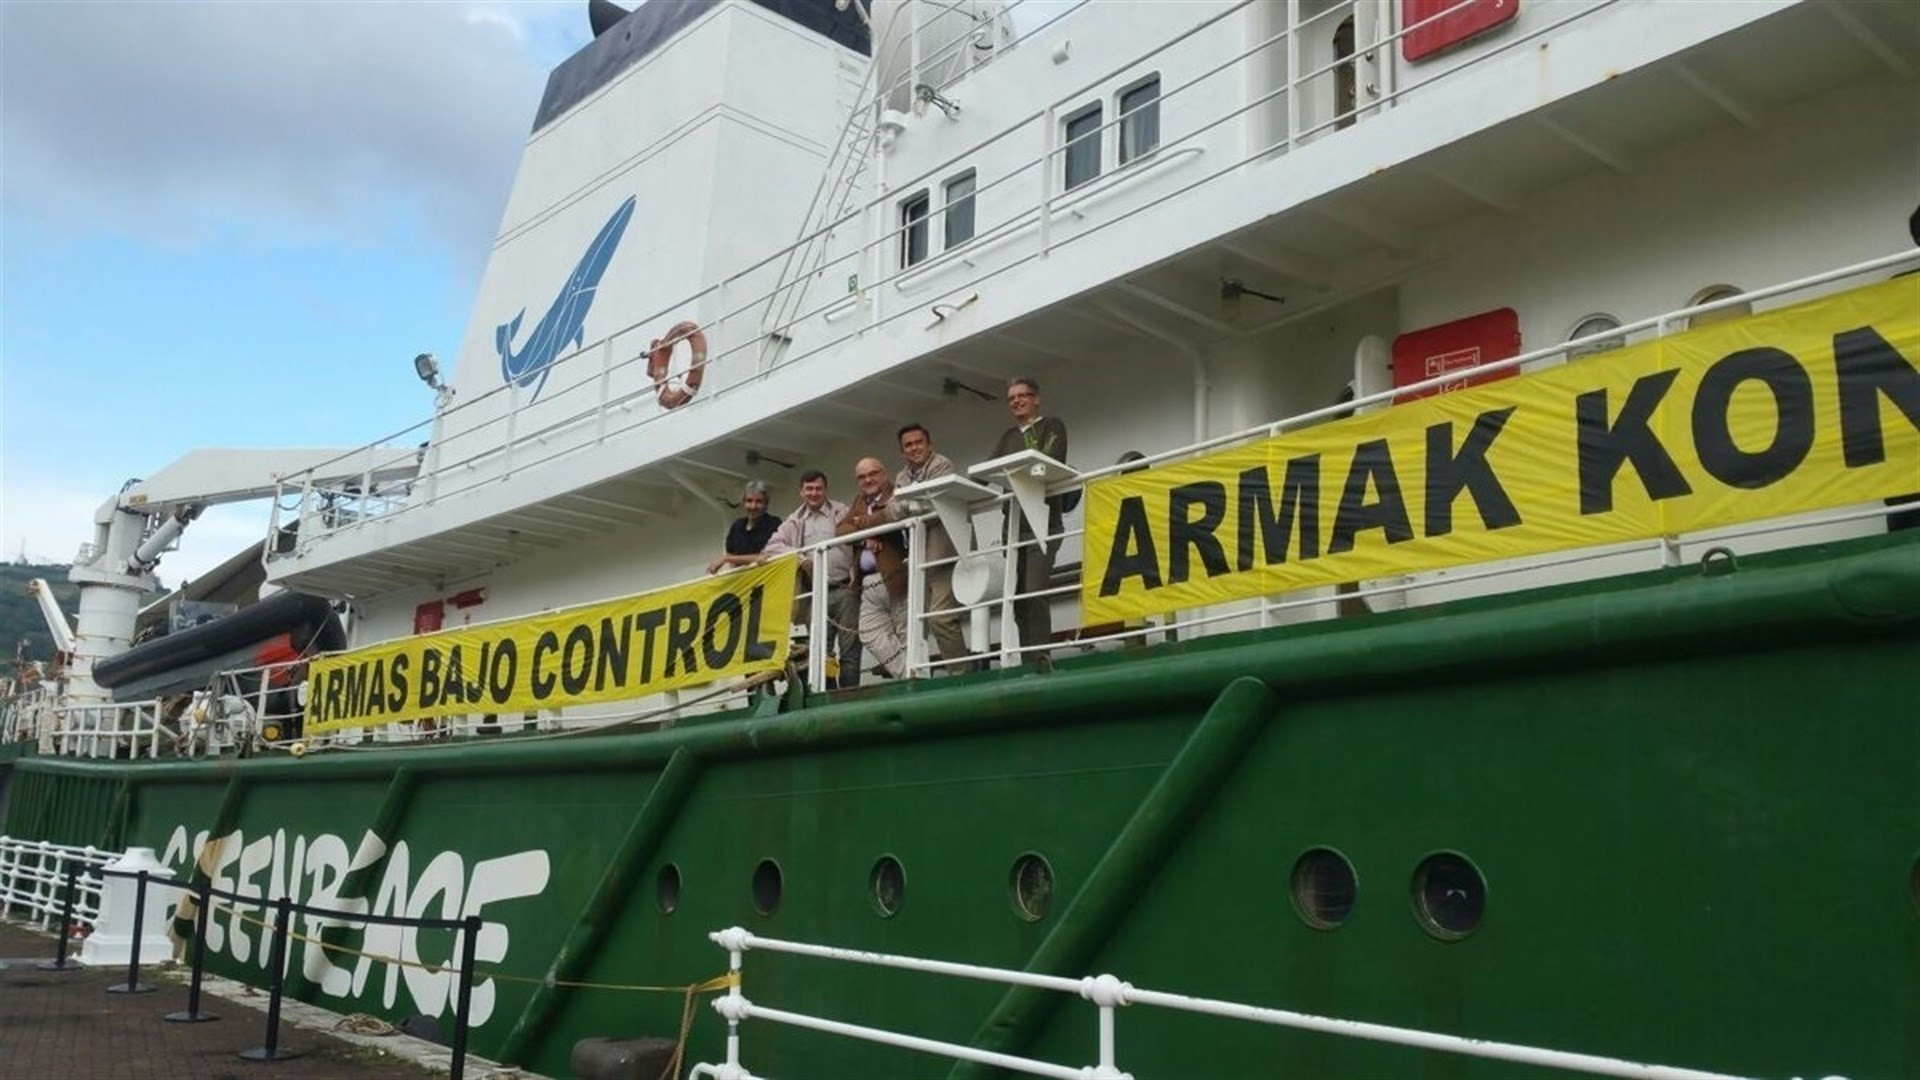 Barco Greenpeace campaa Armas bajo control